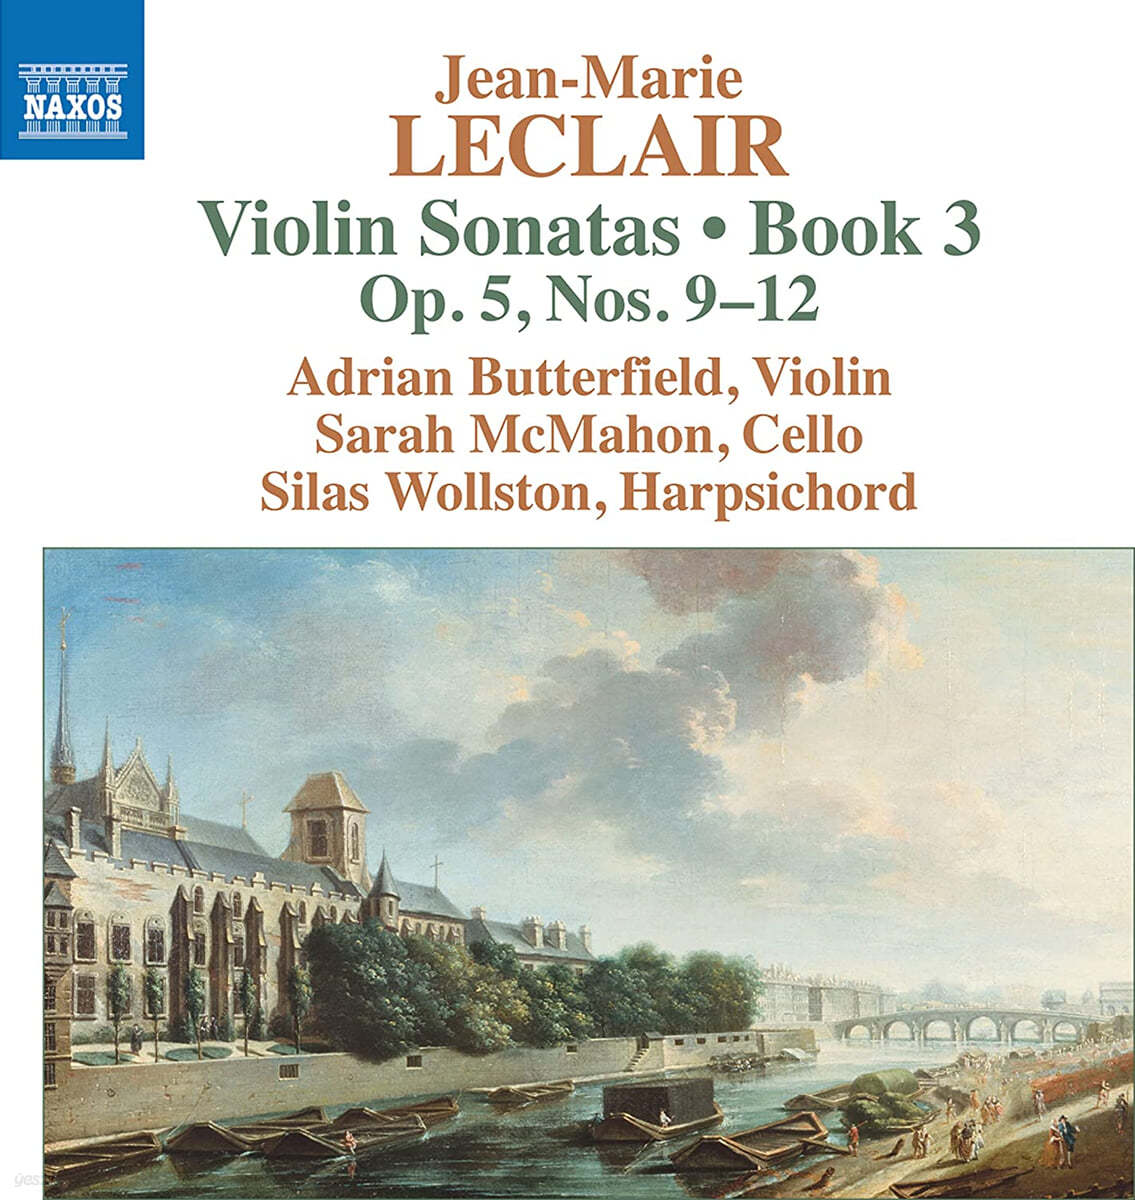 Adrian Butterfield 르클레르: 바이올린 소나타 3권, 9-12번 (Leclair: Violin Sonatas, Book 3 &#39;op. 5, Nos. 9-12&#39;)